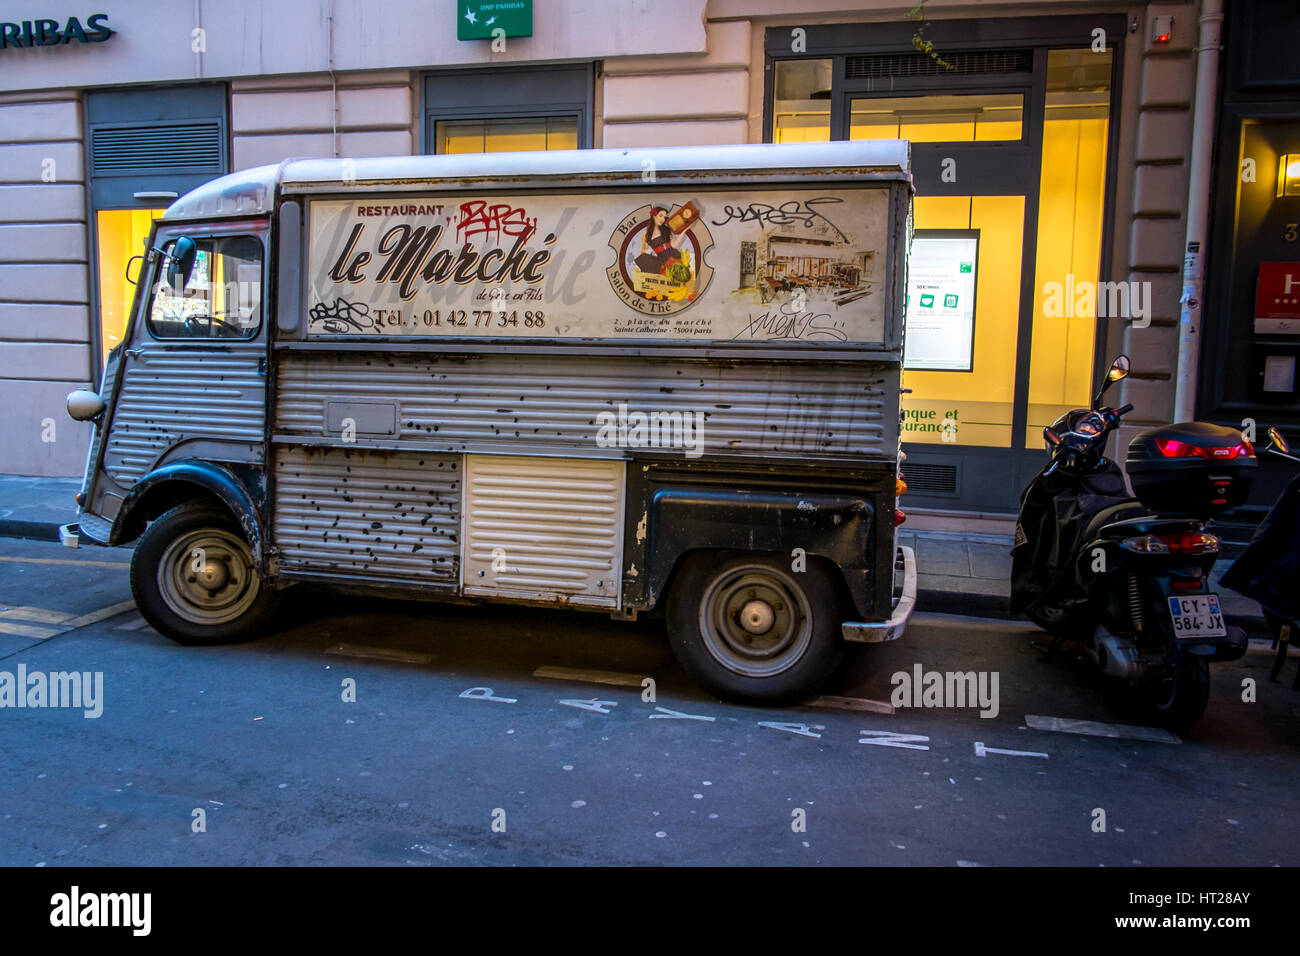 Well used Citroen H van from Le Marche Restaurant, 4th arrondissement Paris, France. Stock Photo